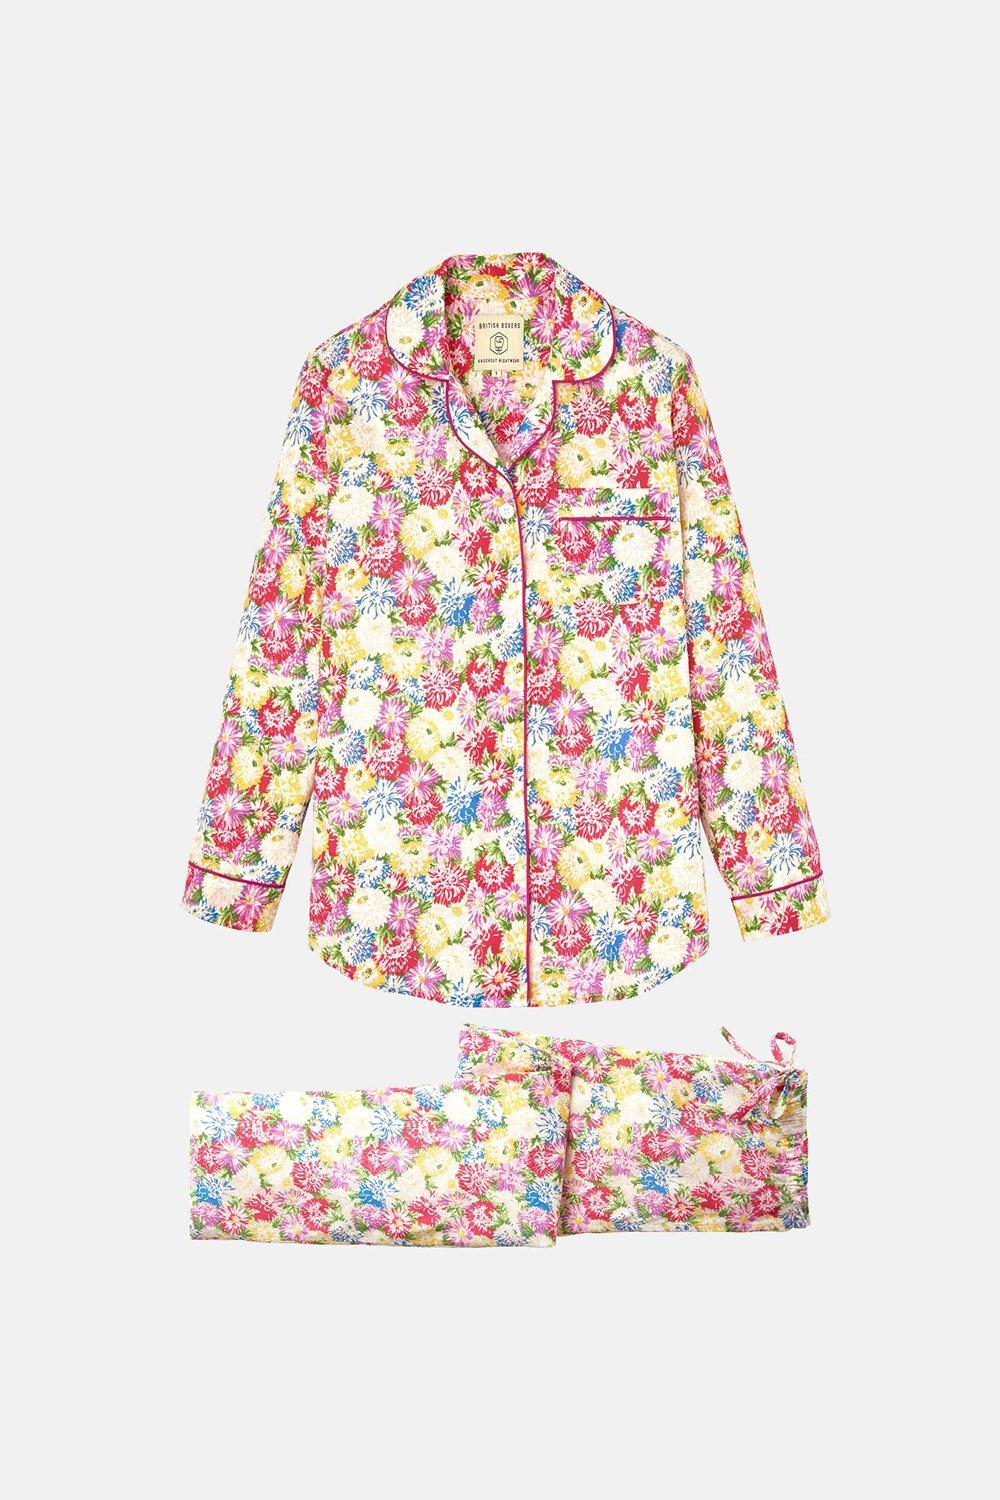 'Flower Bed' Pyjama Set